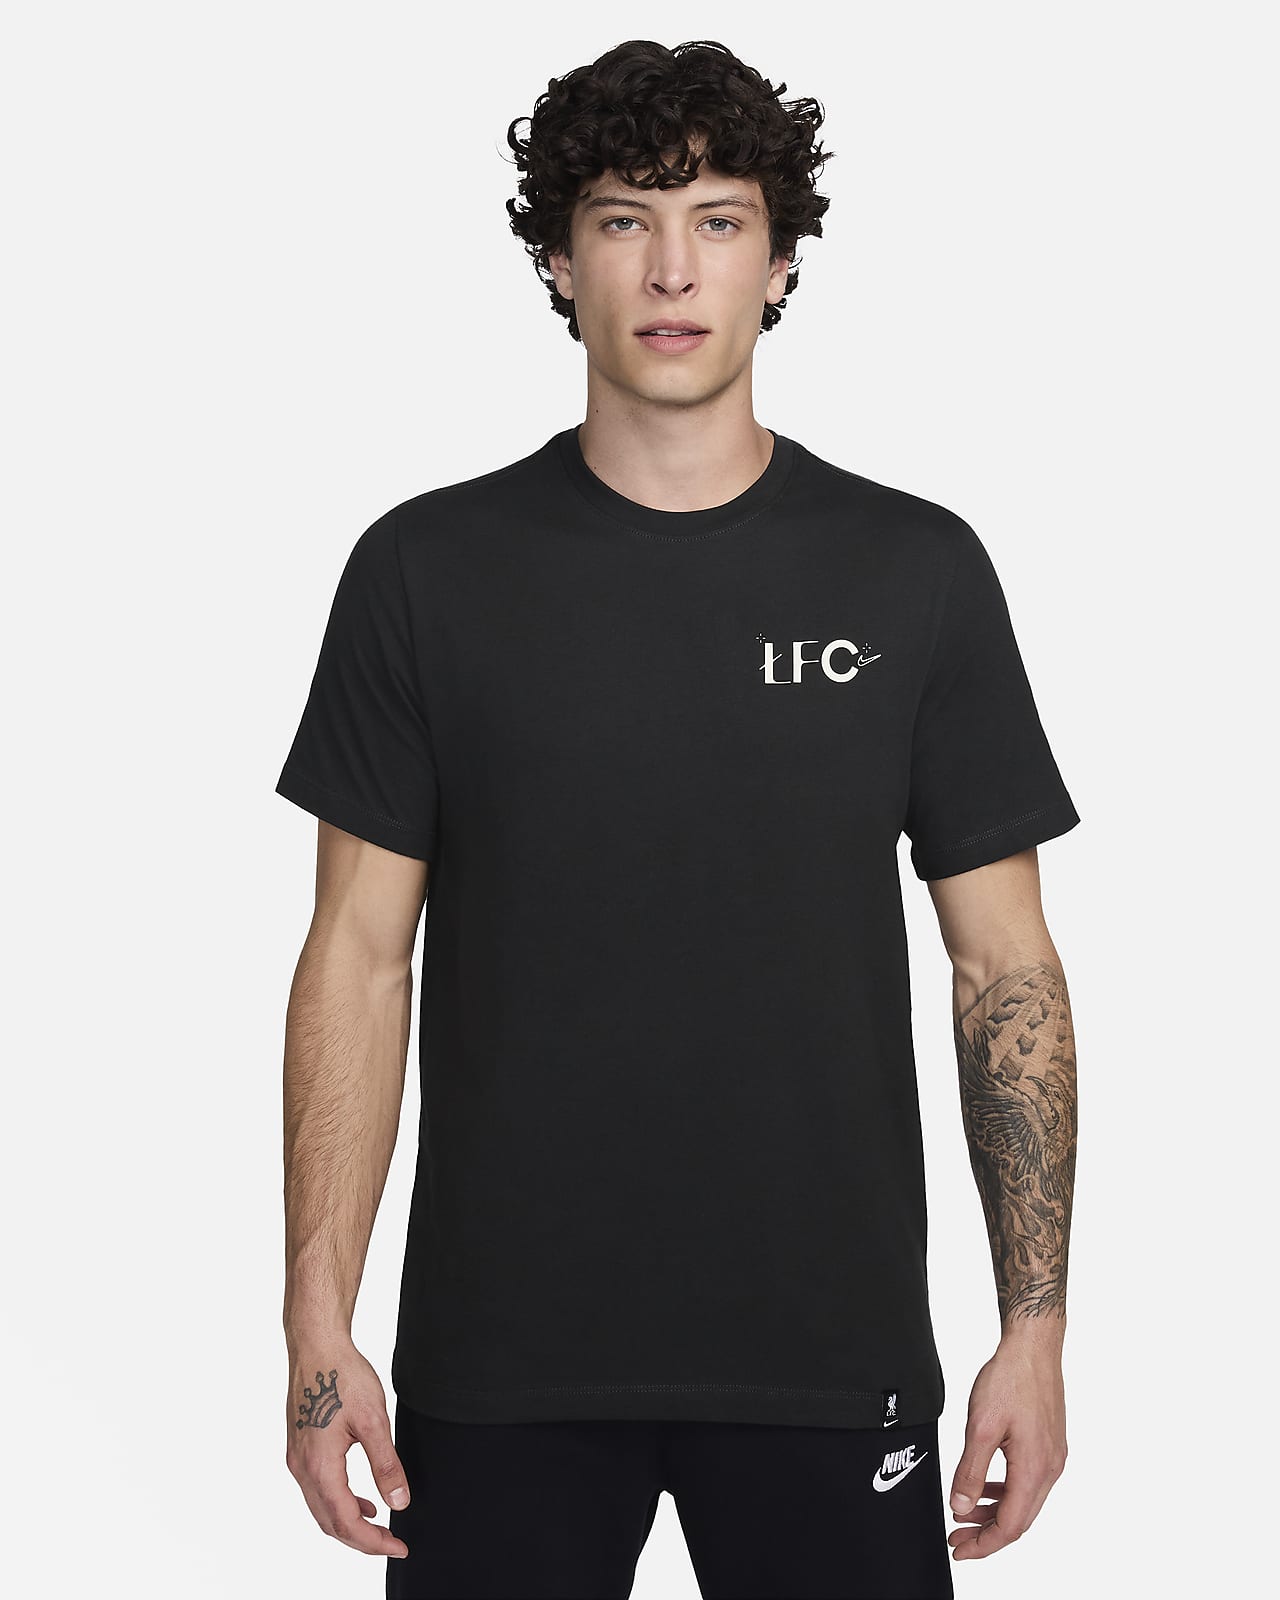 Liverpool F.C. Men's Graphic T-Shirt